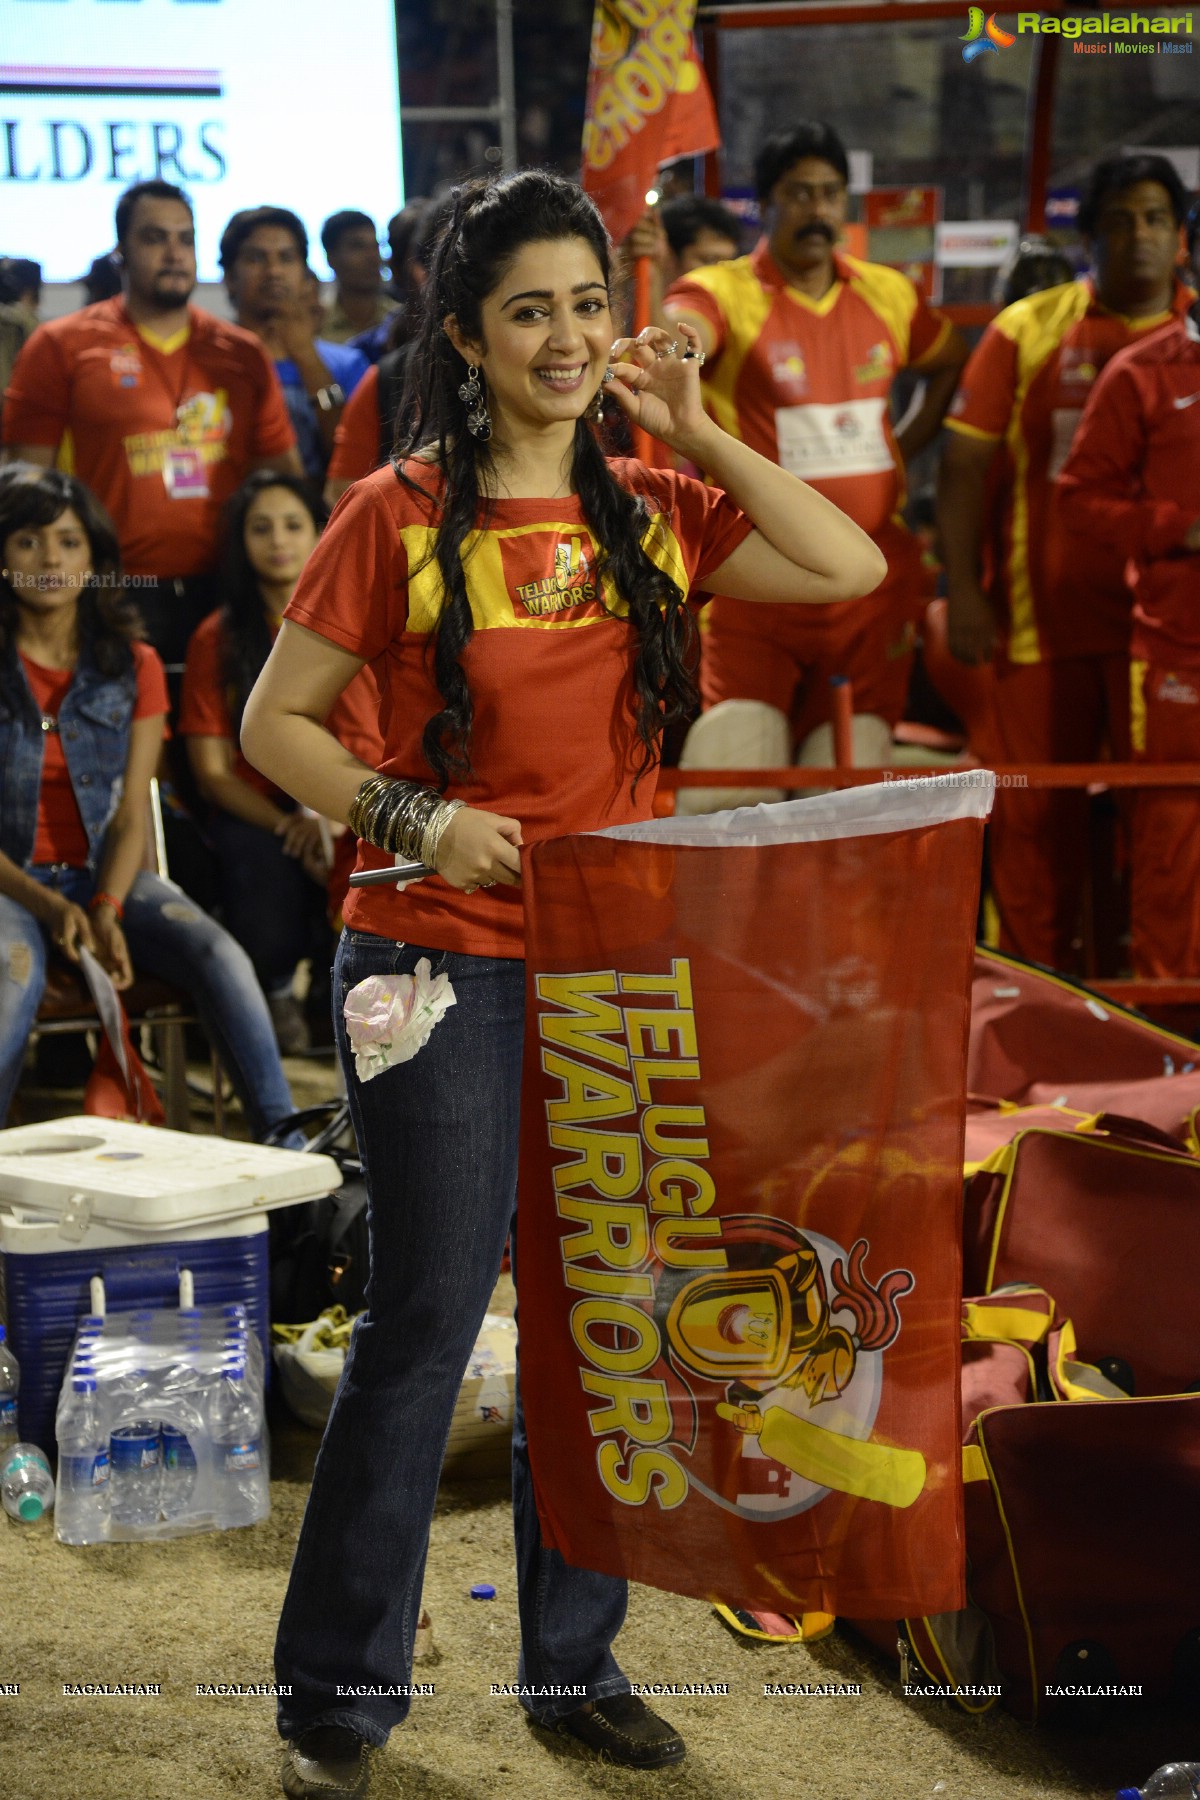 Charmi at CCL 4 Match, Hyderabad, Exclusive Photos